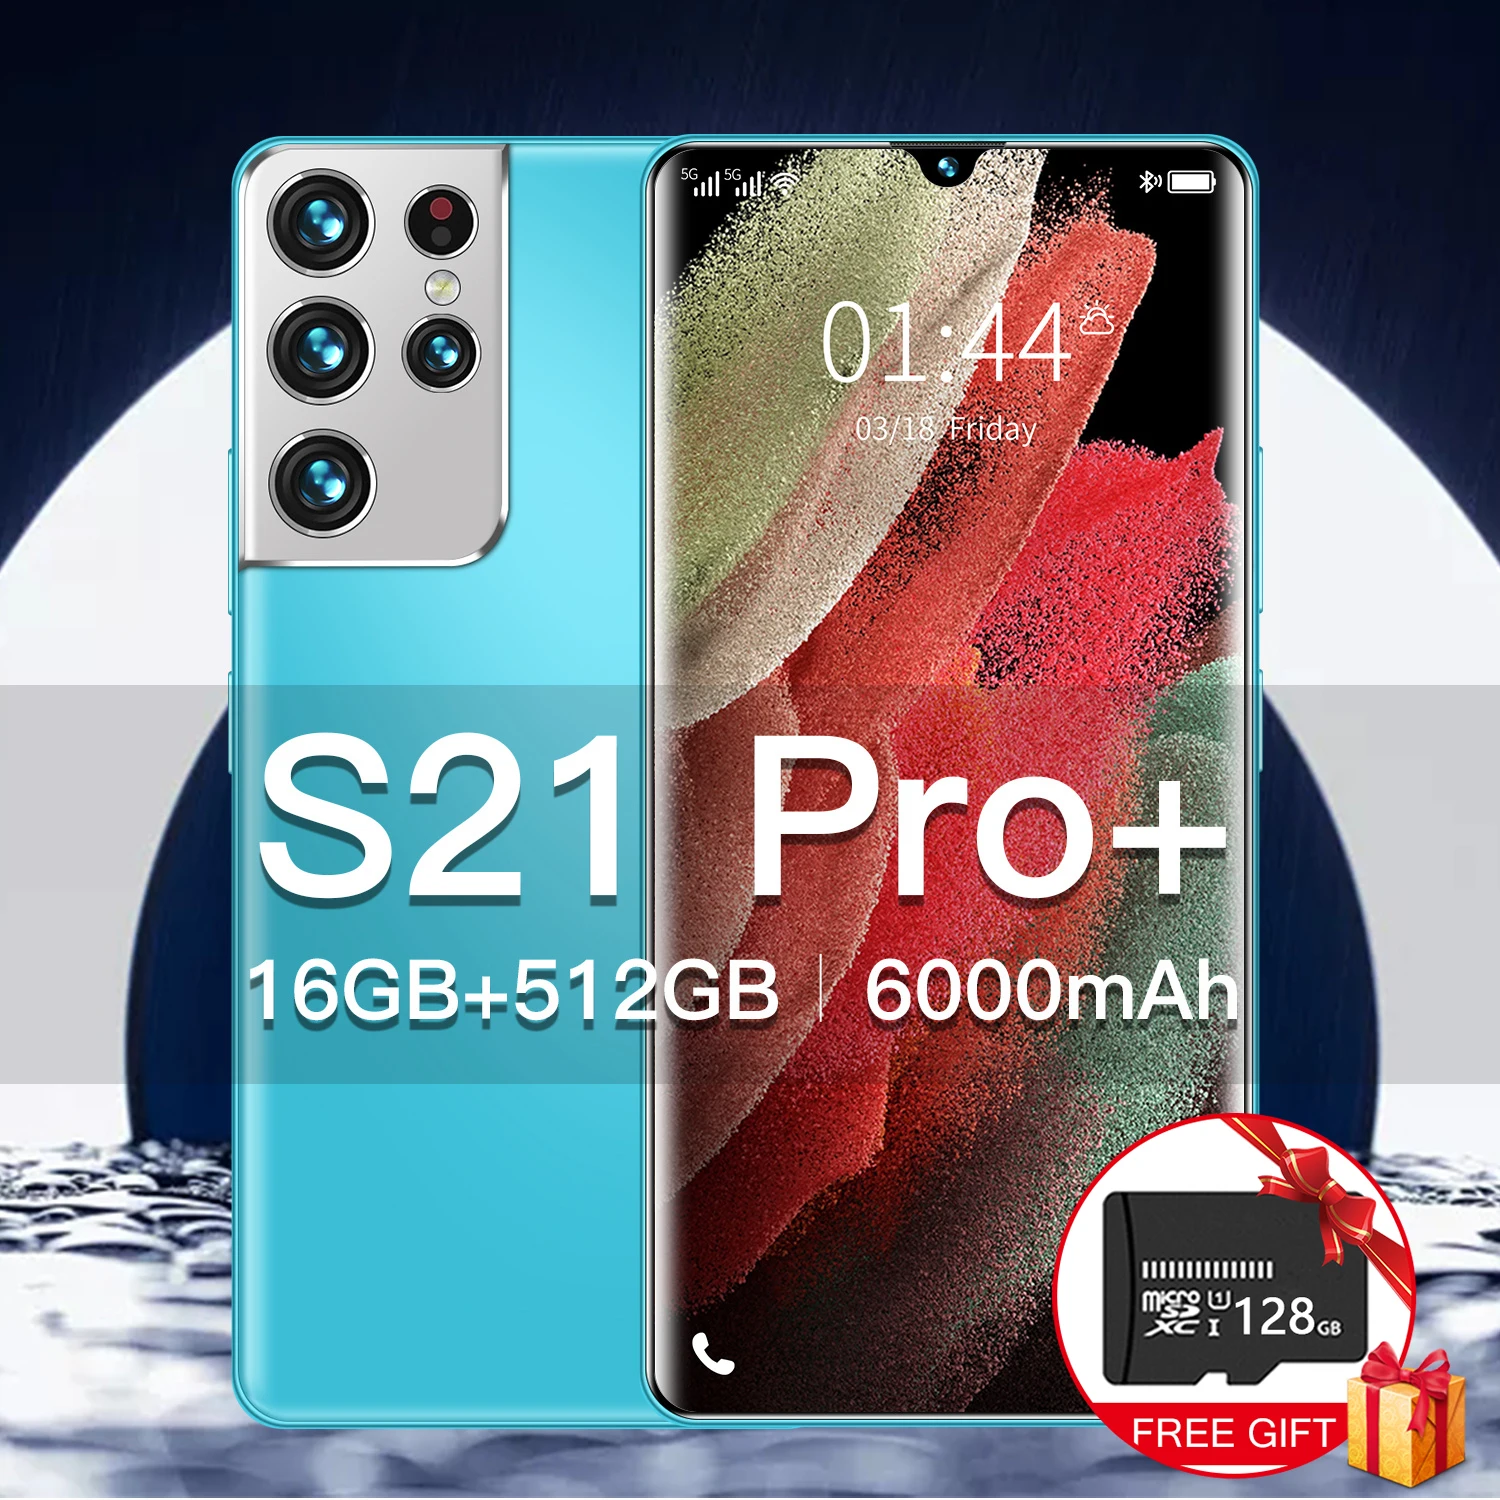 

Смартфон S21 Pro +, 16 + 512 ГБ, 6,7 дюйма, Android 11, две SIM-карты, 6000 мА · ч, 64 мп